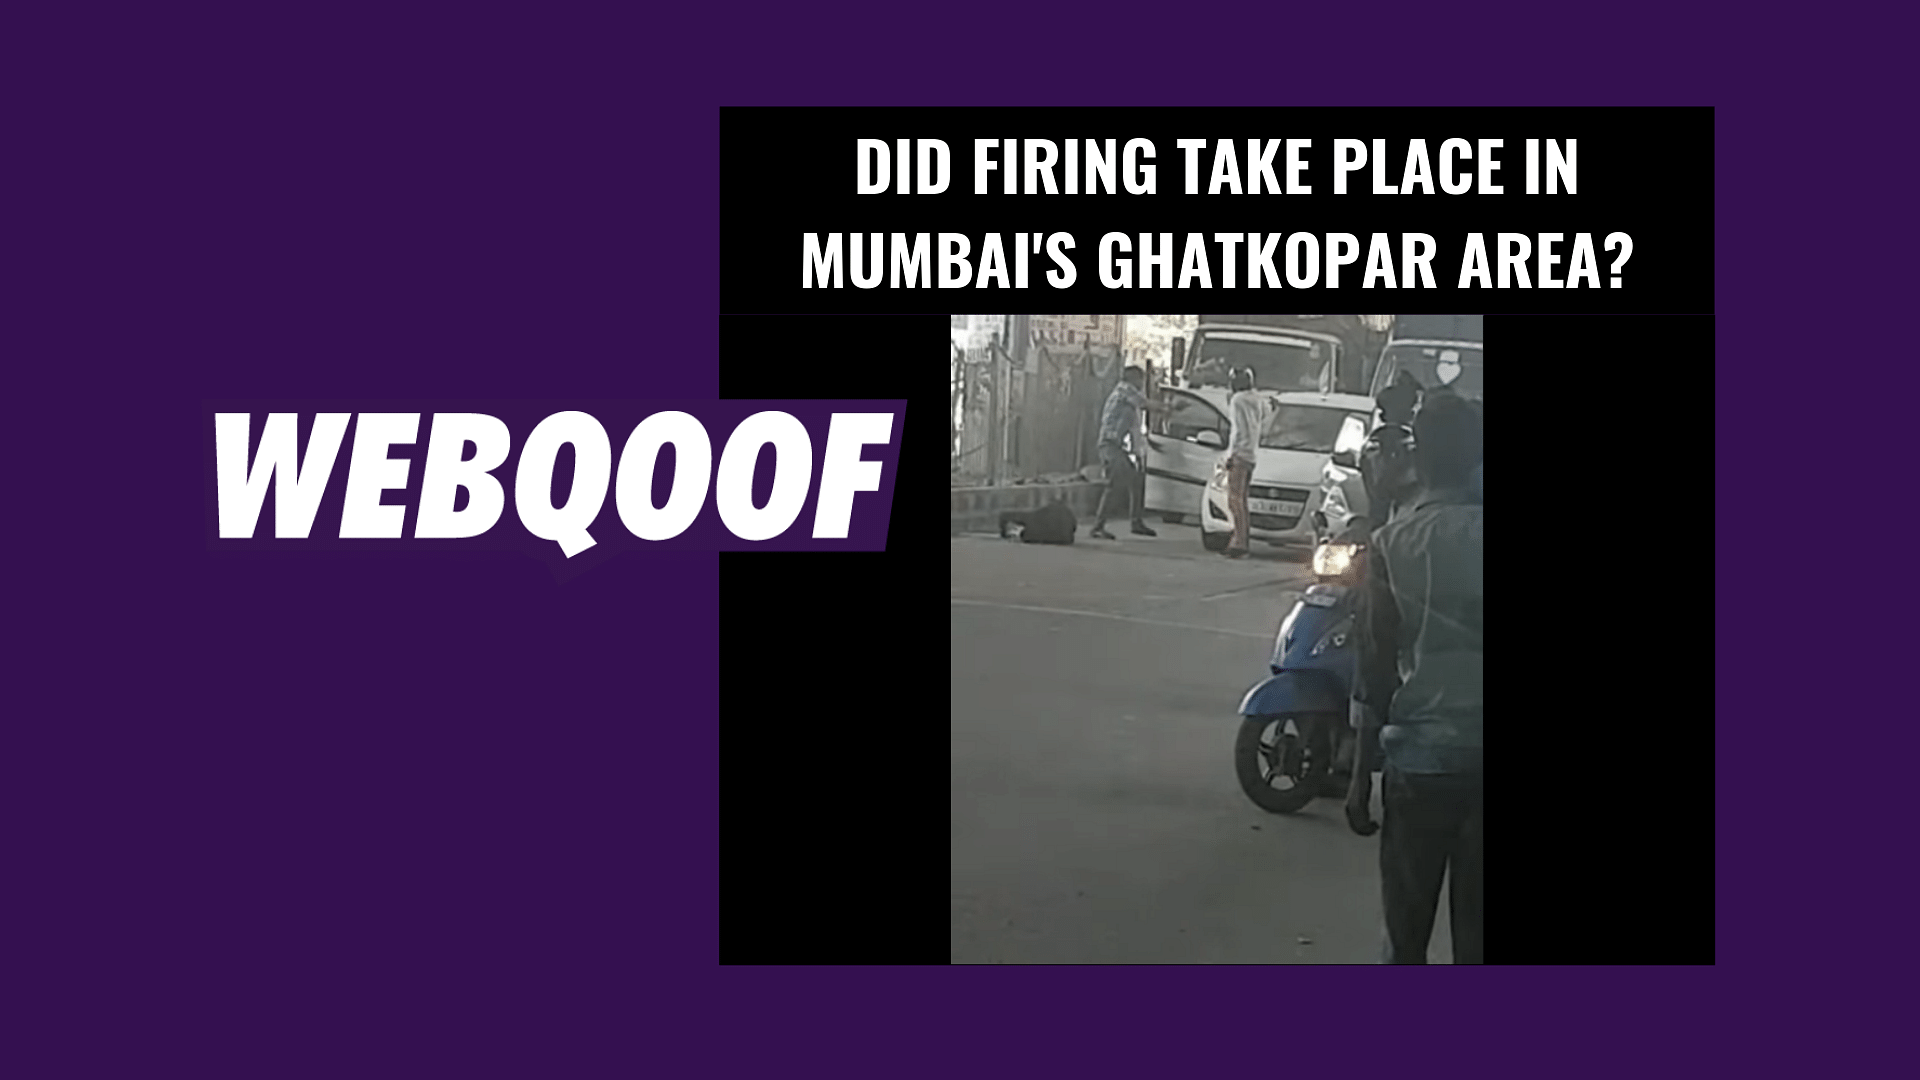 A viral video falsely claimed that firing took place in Mumbai’s Ghatkopar area.